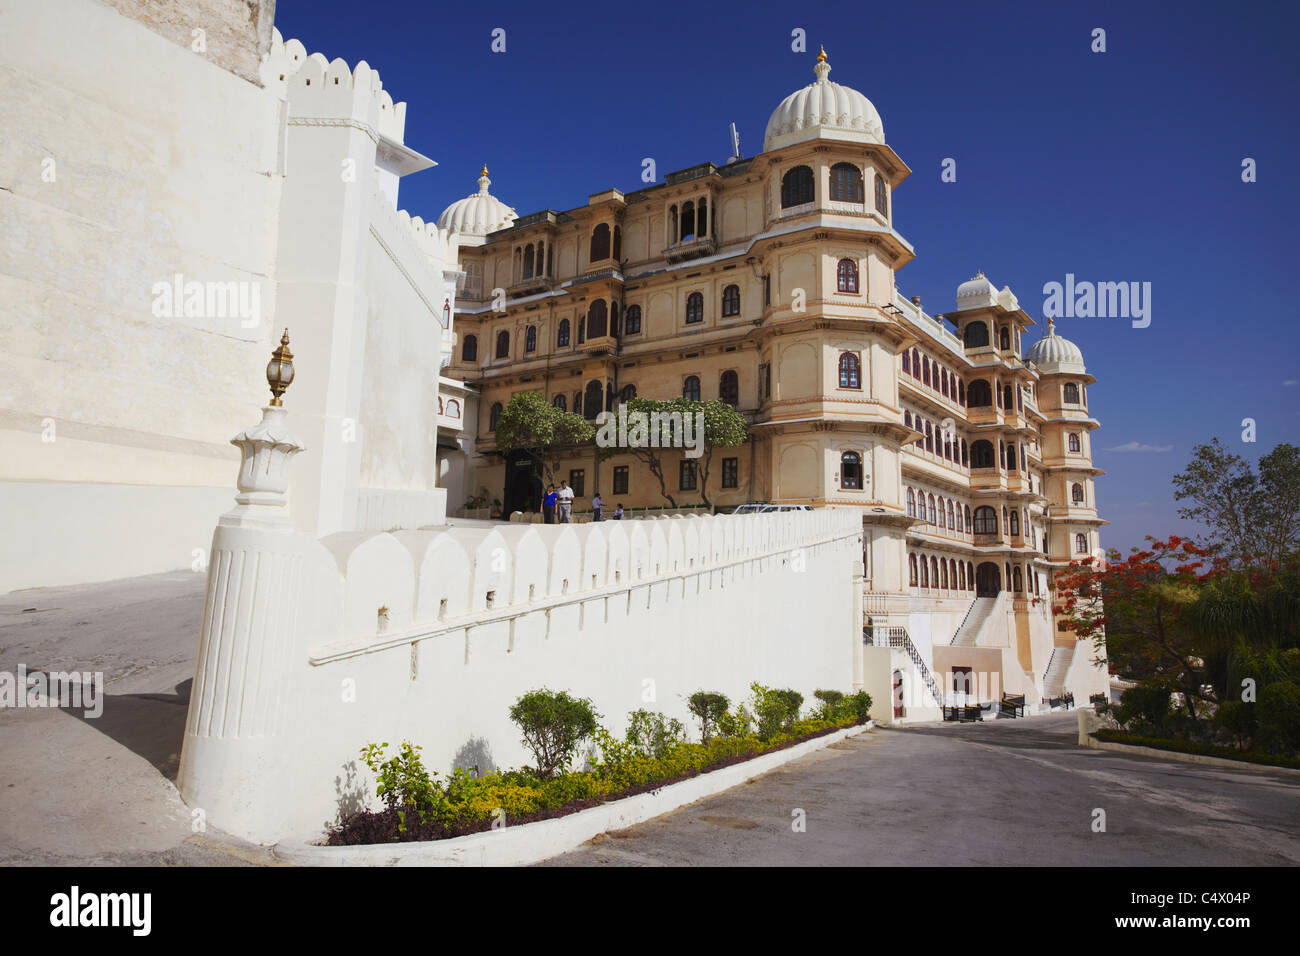 Fateh Prakash Palace Hotel inside City Palace complex, Udaipur, Rajasthan, India Stock Photo